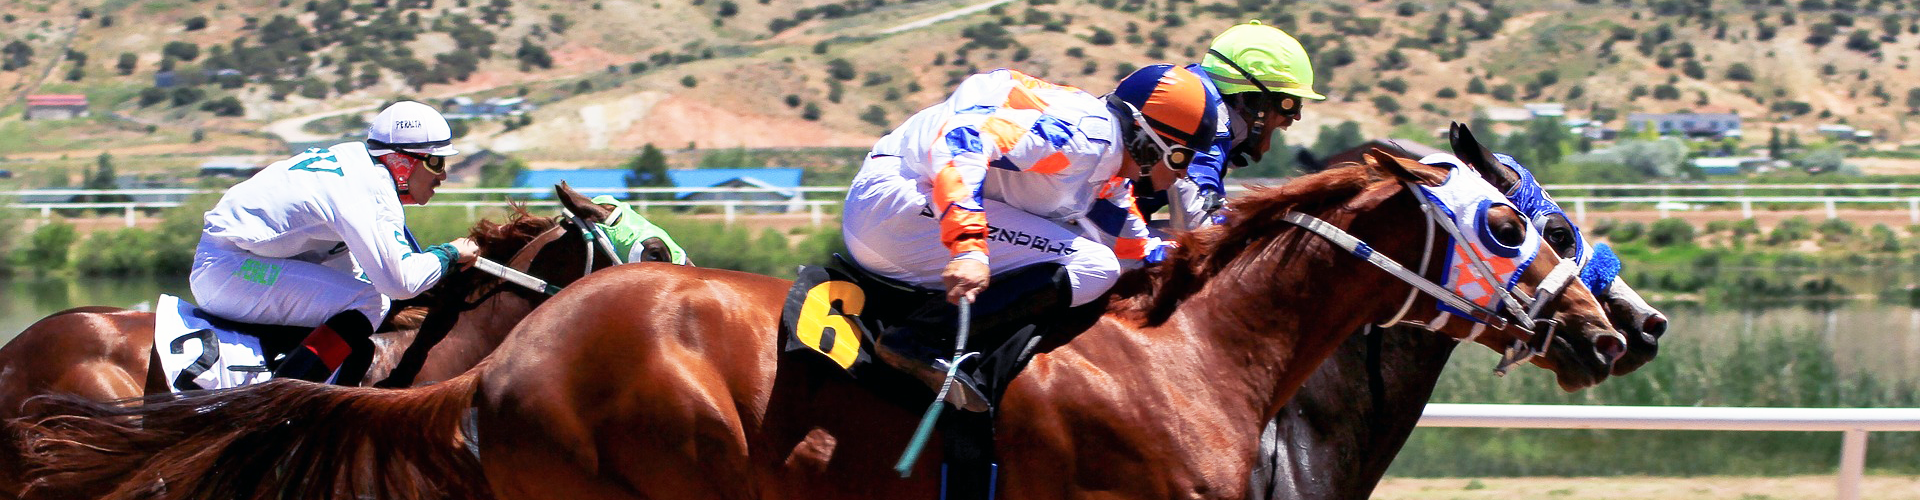 Top horse race betting - DRF - Winning horses on racetrack